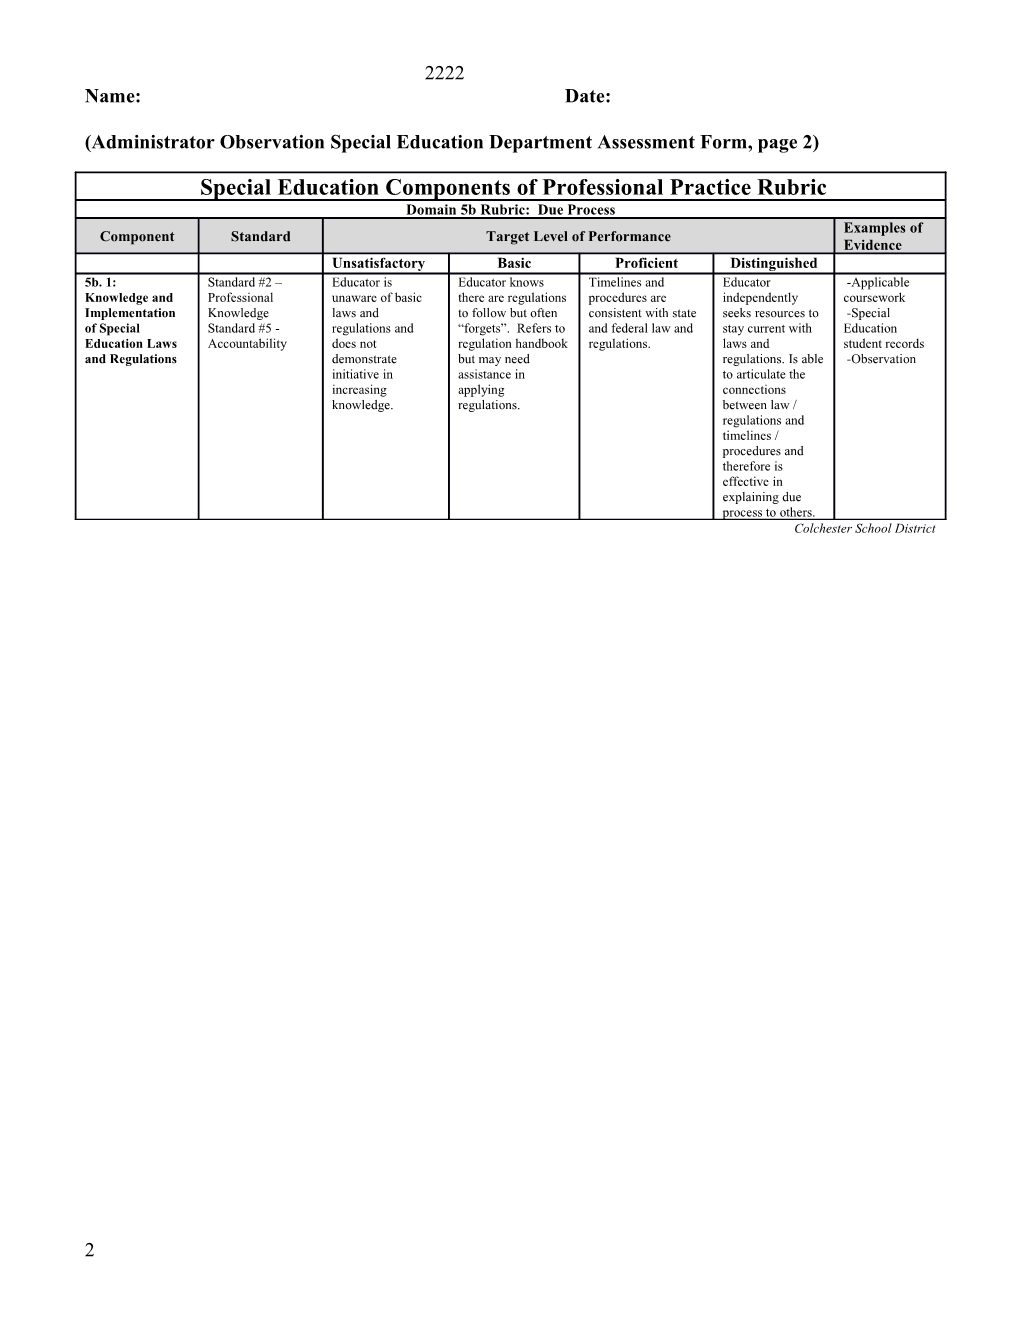 Special Education Departmentadministrator Observation Assessment Form